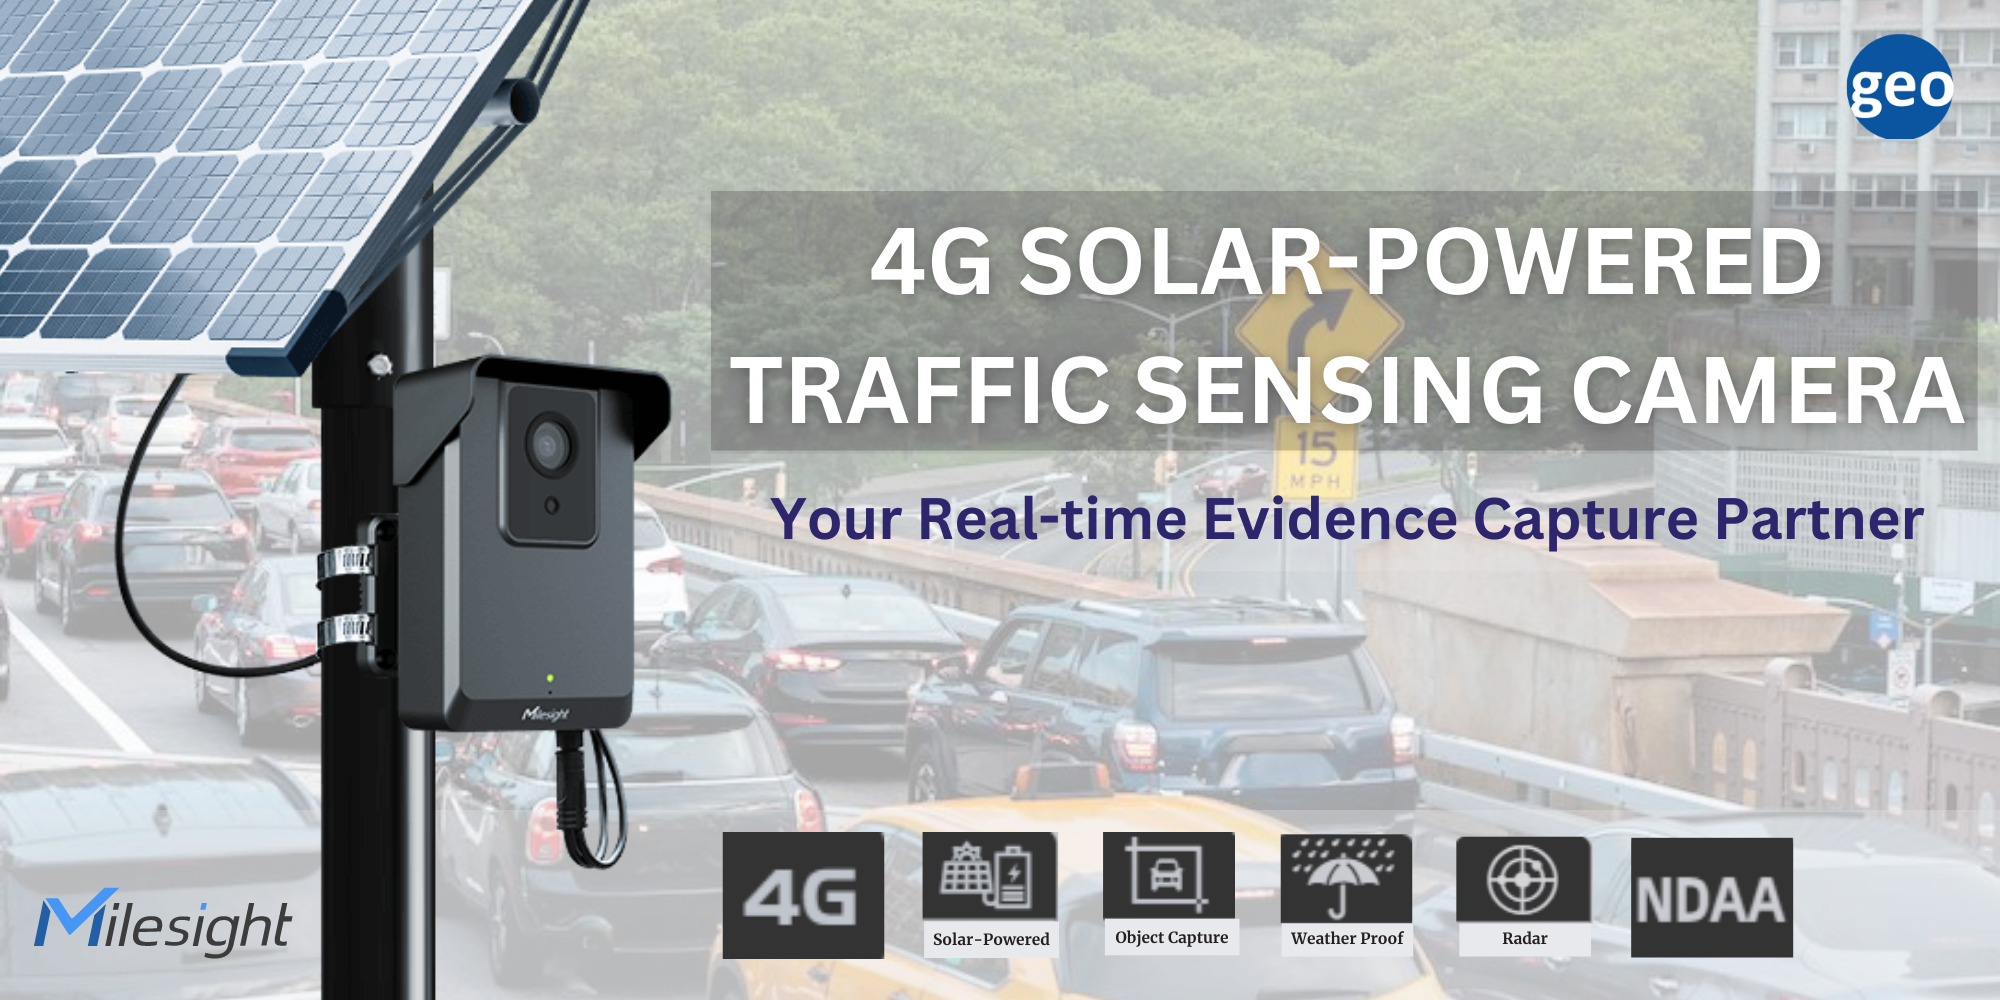 Milesight: 4G Solar-Powered Traffic Sensing Camera